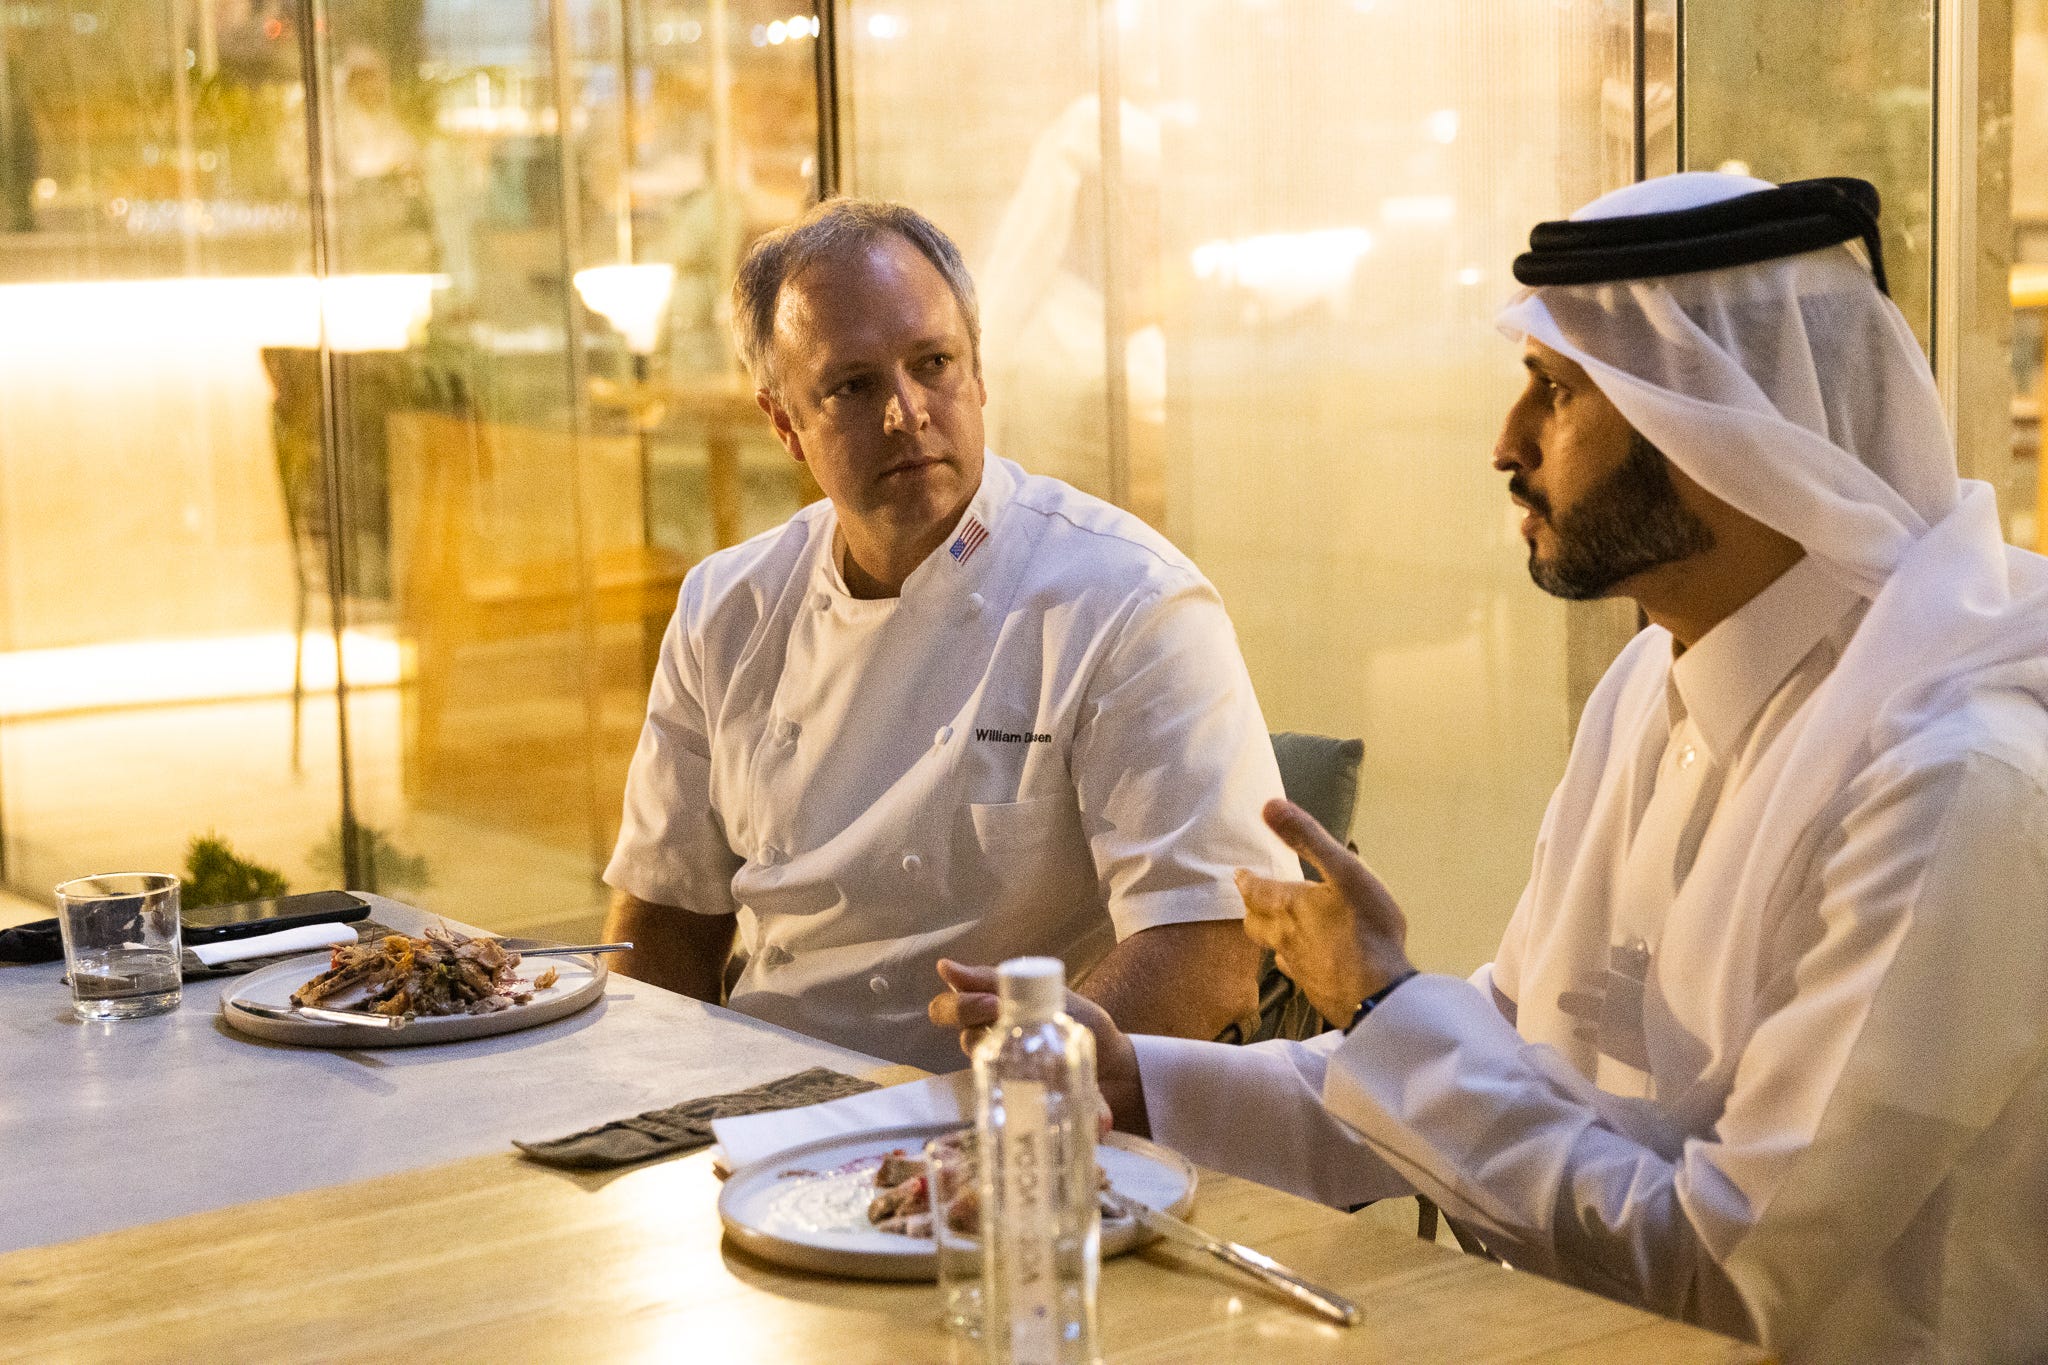 Qatari cuisine inspires an American chef